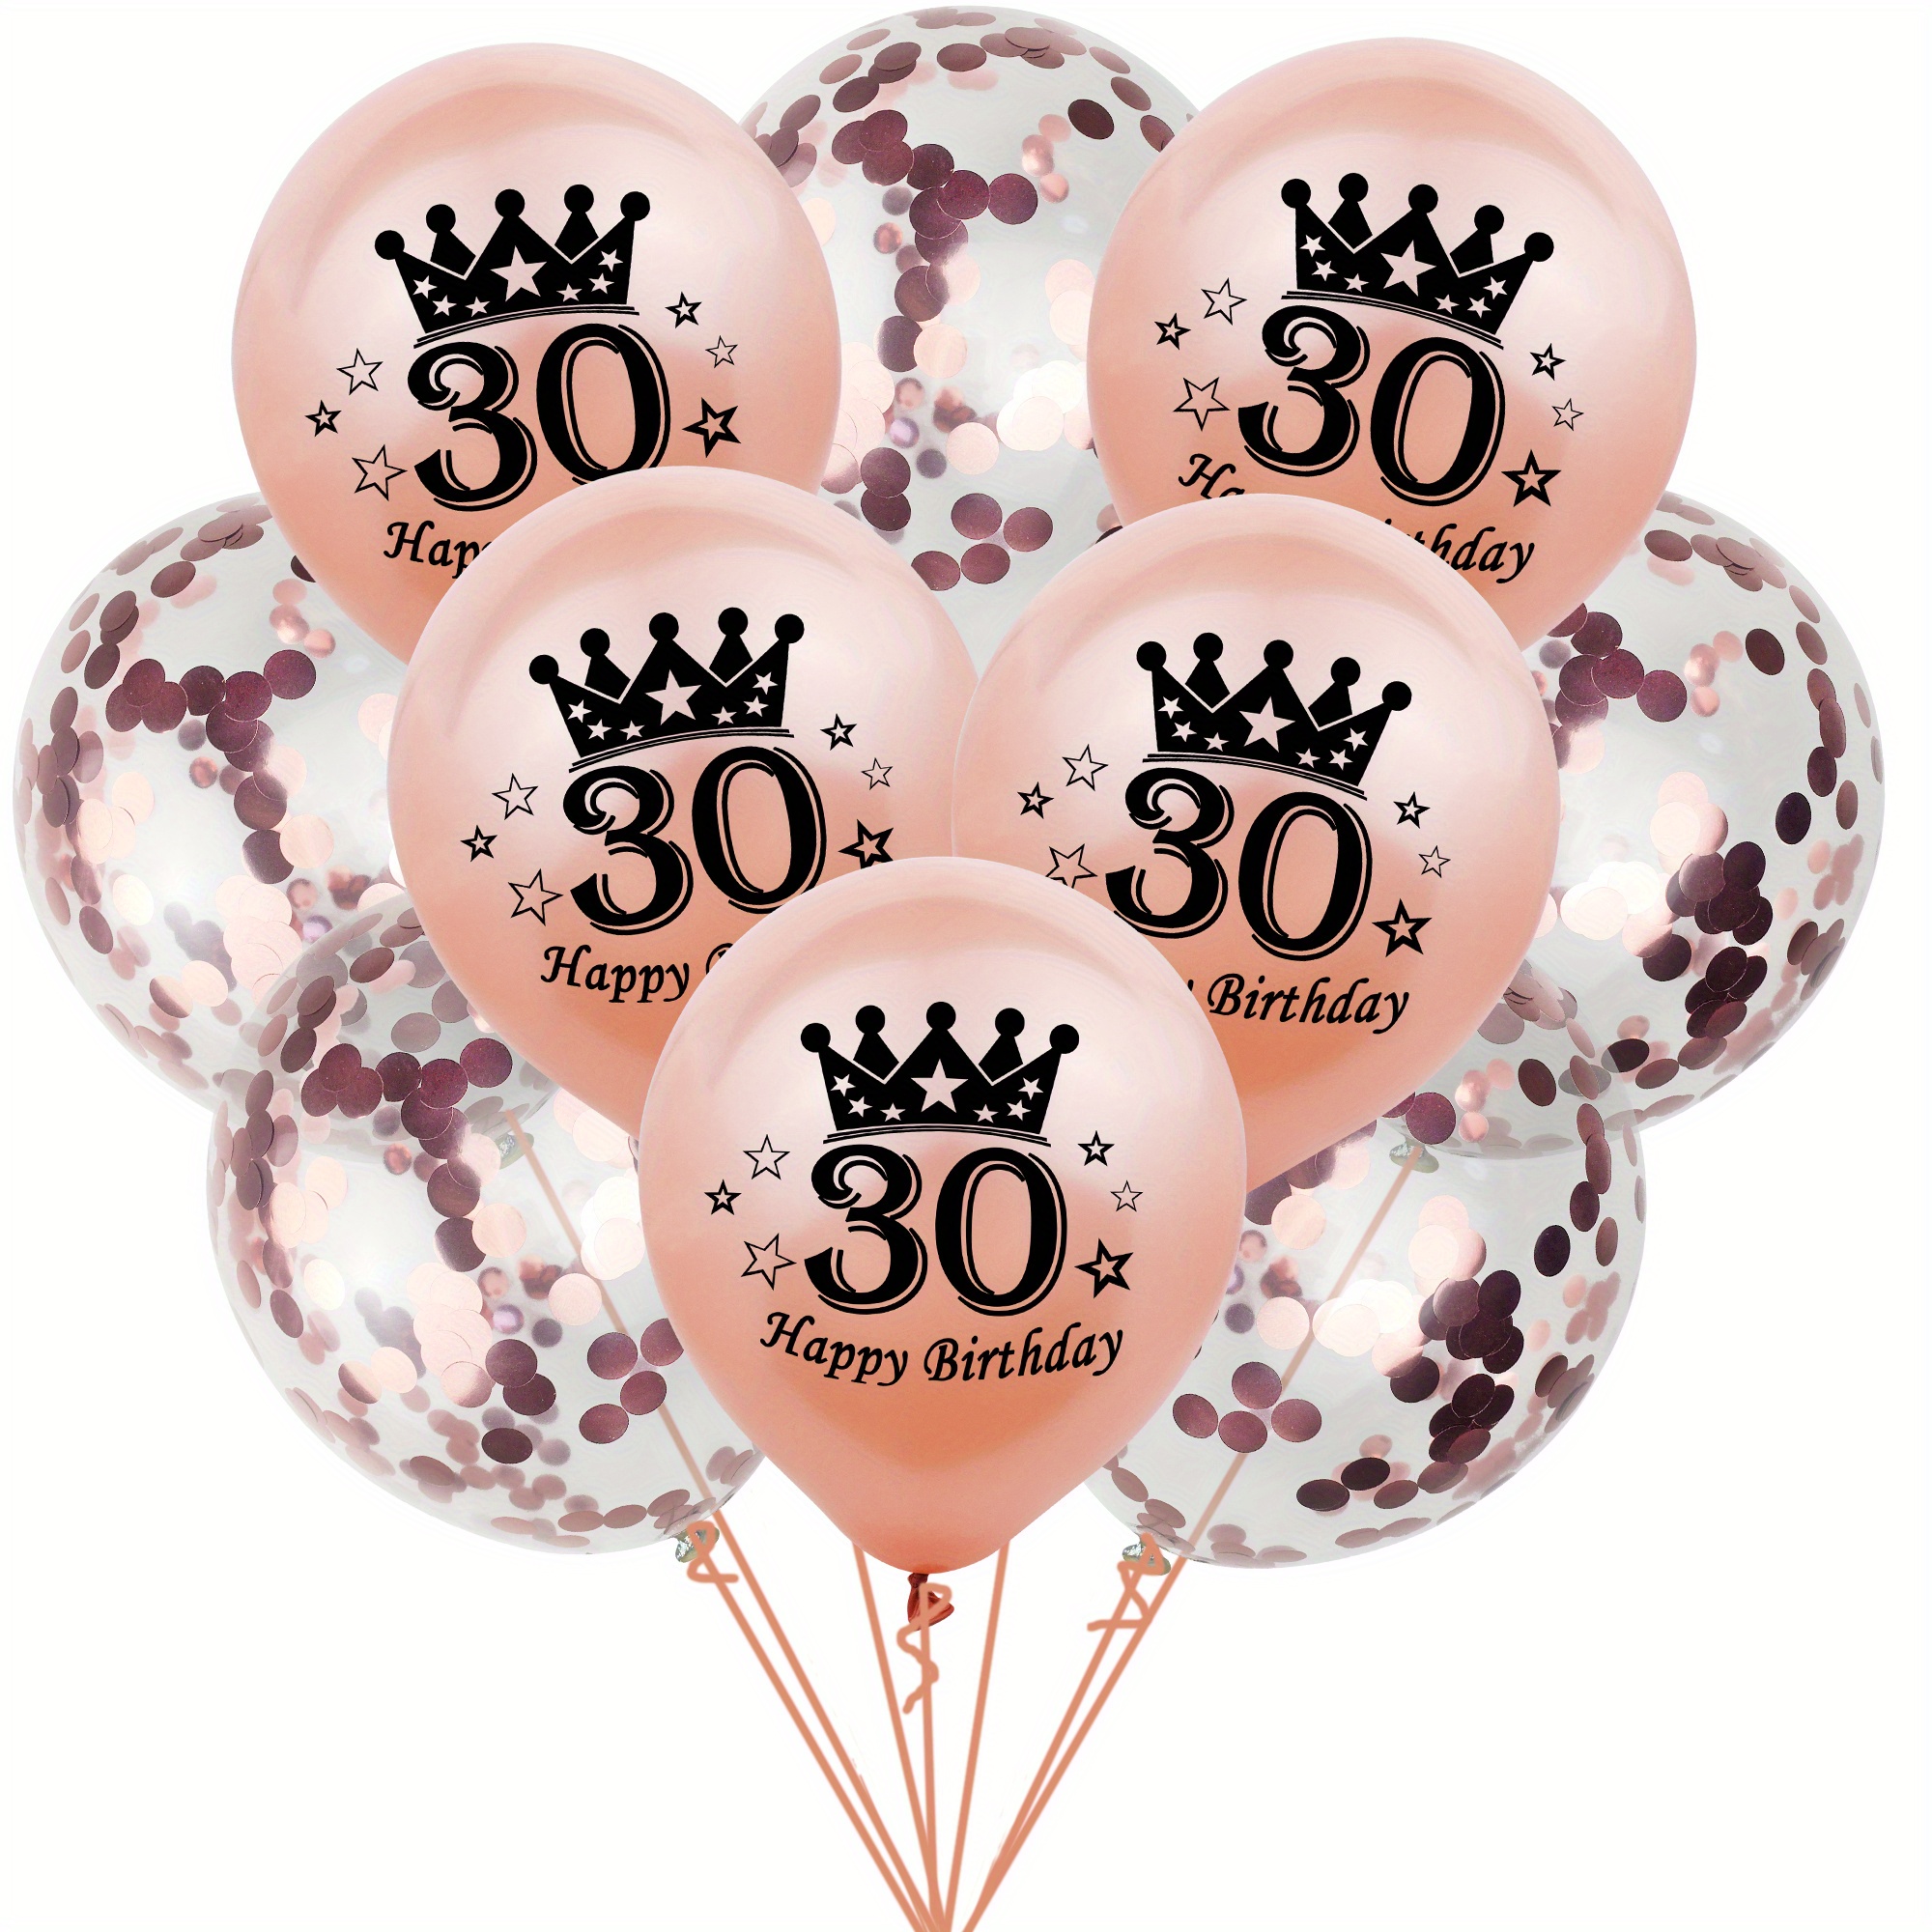 Globos para cumpleaños número 30 -  30th birthday decorations, Rose gold  party supplies, 30th birthday balloons